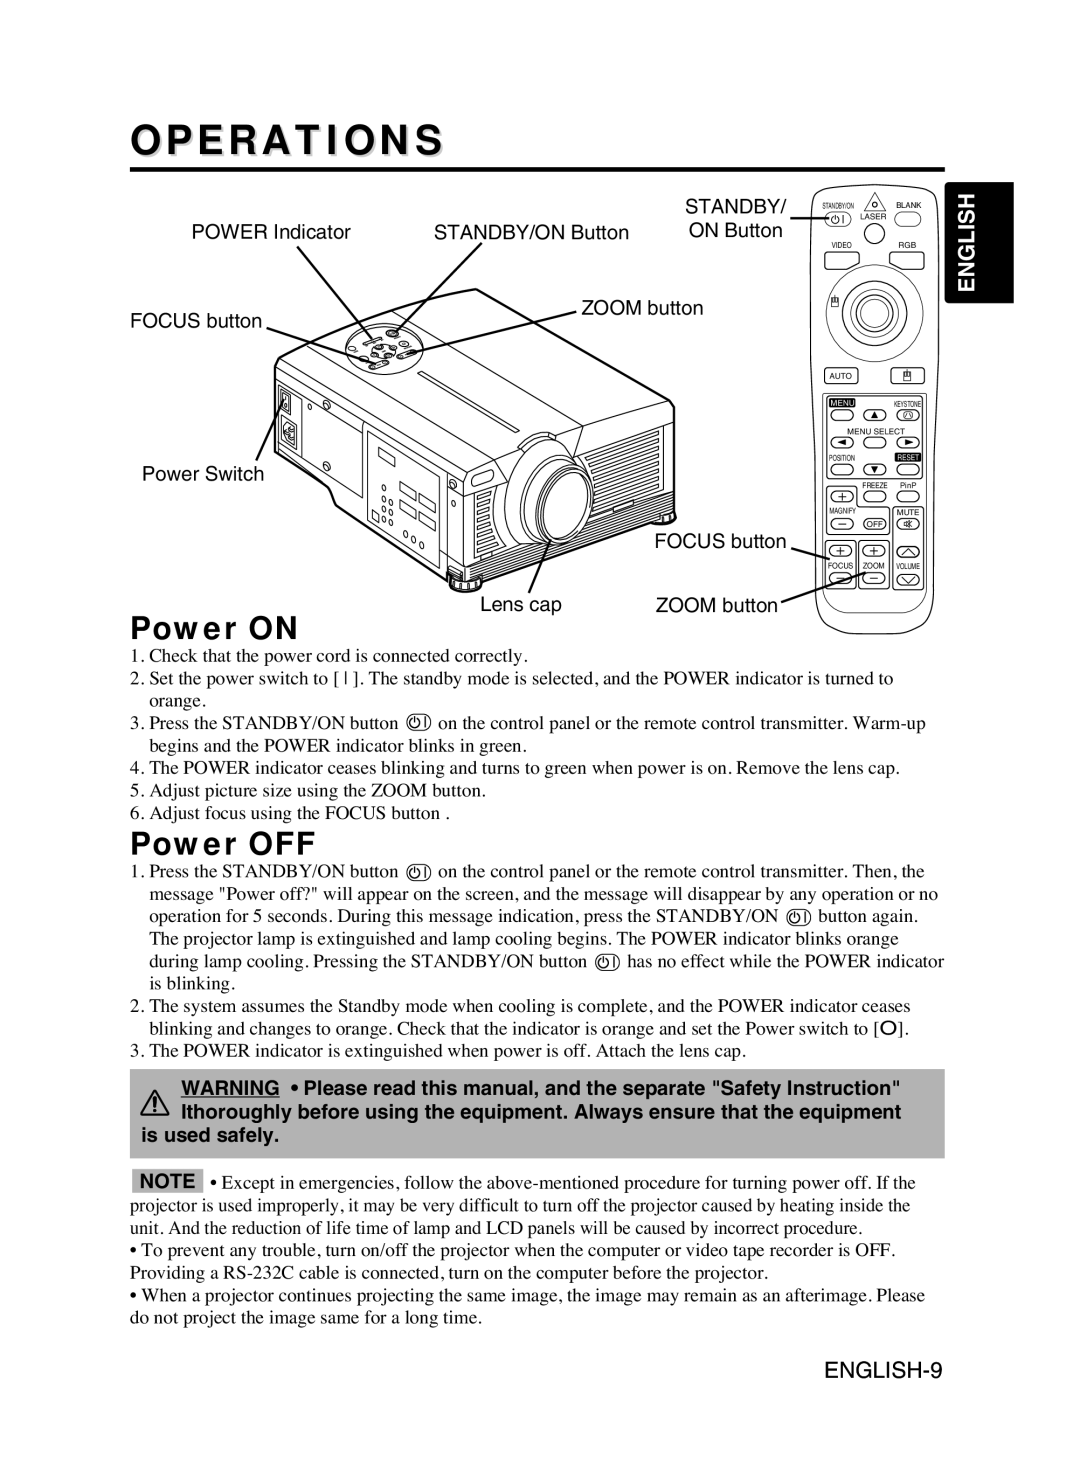 Proxima ASA DP6870 manual Operations, Power ON, Power OFF, English 